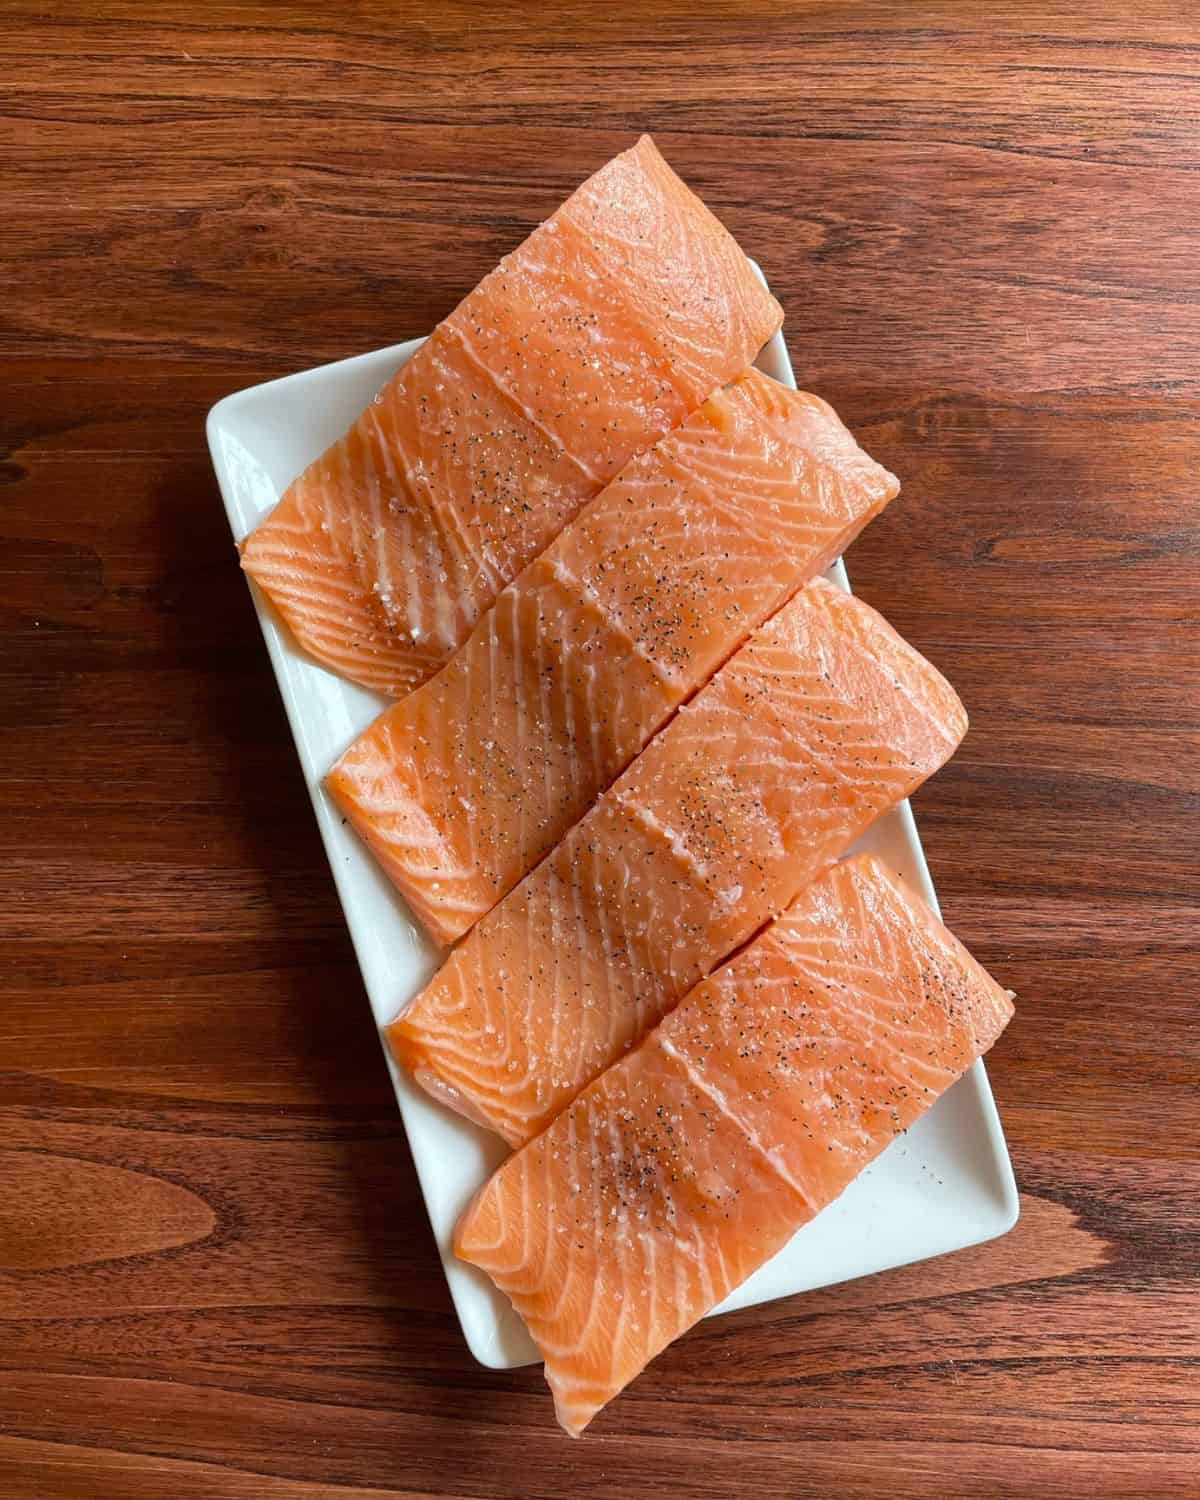 Seasoned fresh salmon filets on a plate.